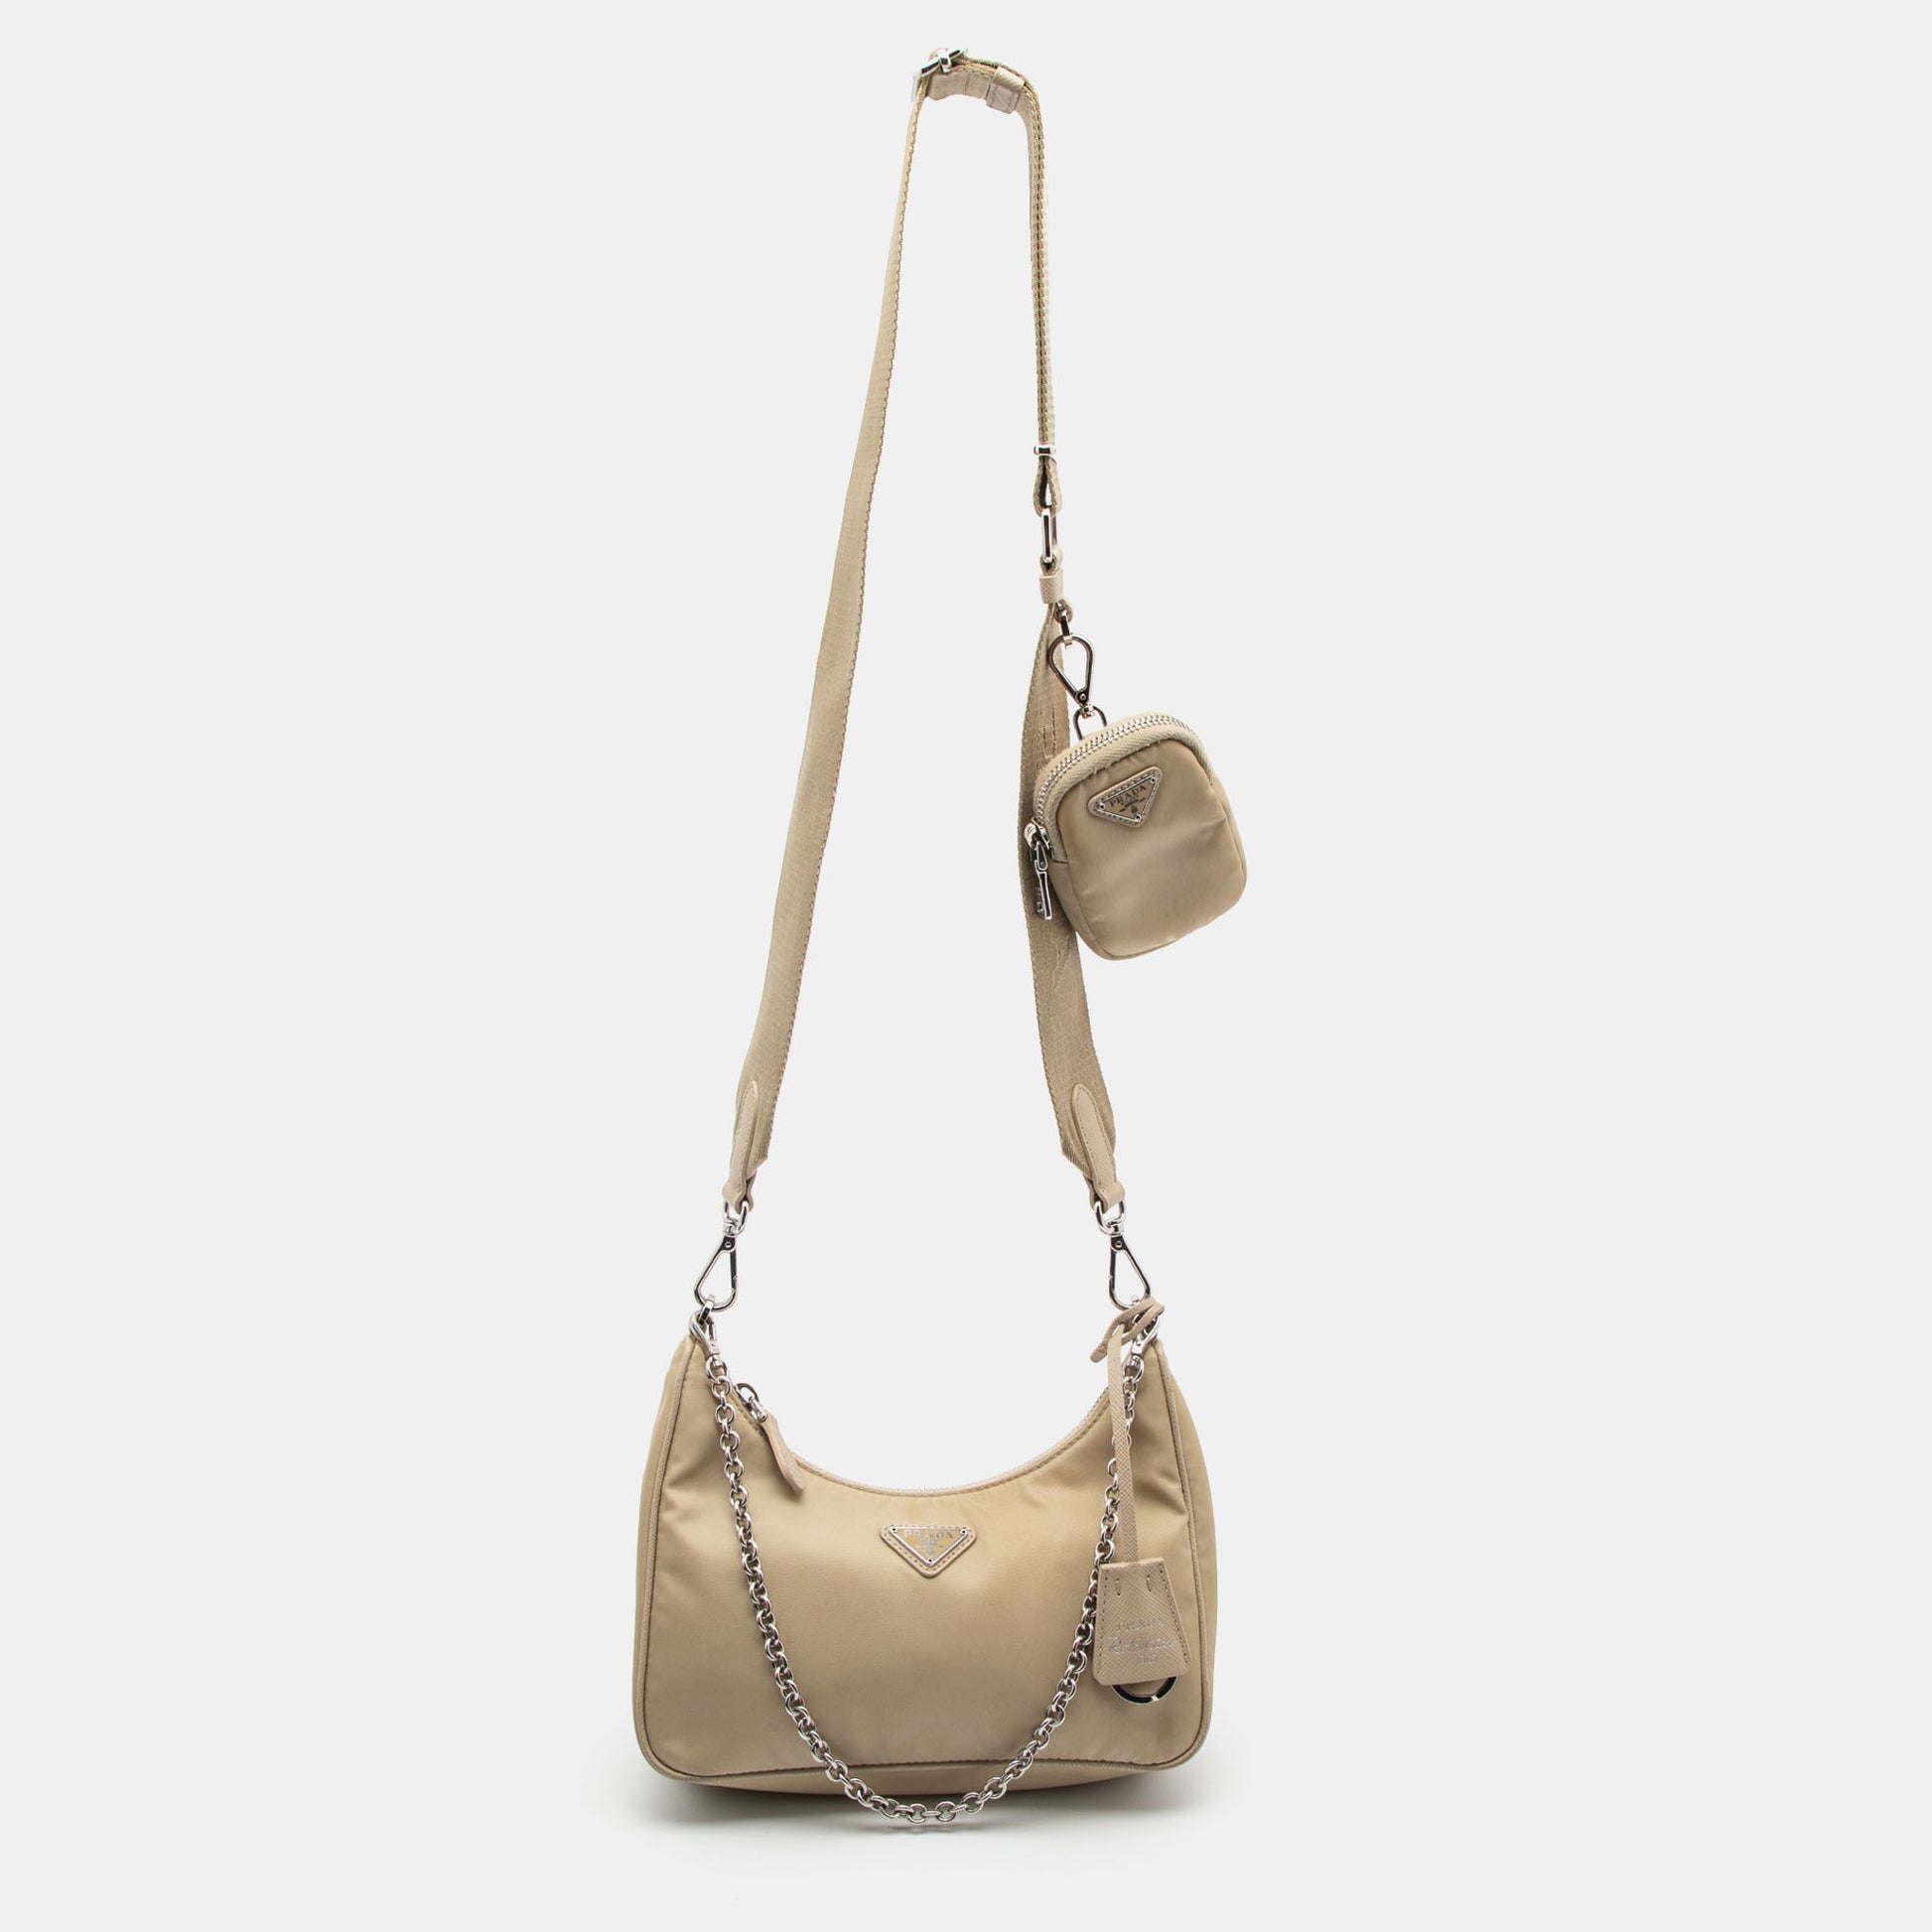 Prada - Authenticated Re-Edition 2005 Handbag - Cloth Beige Plain for Women, Good Condition